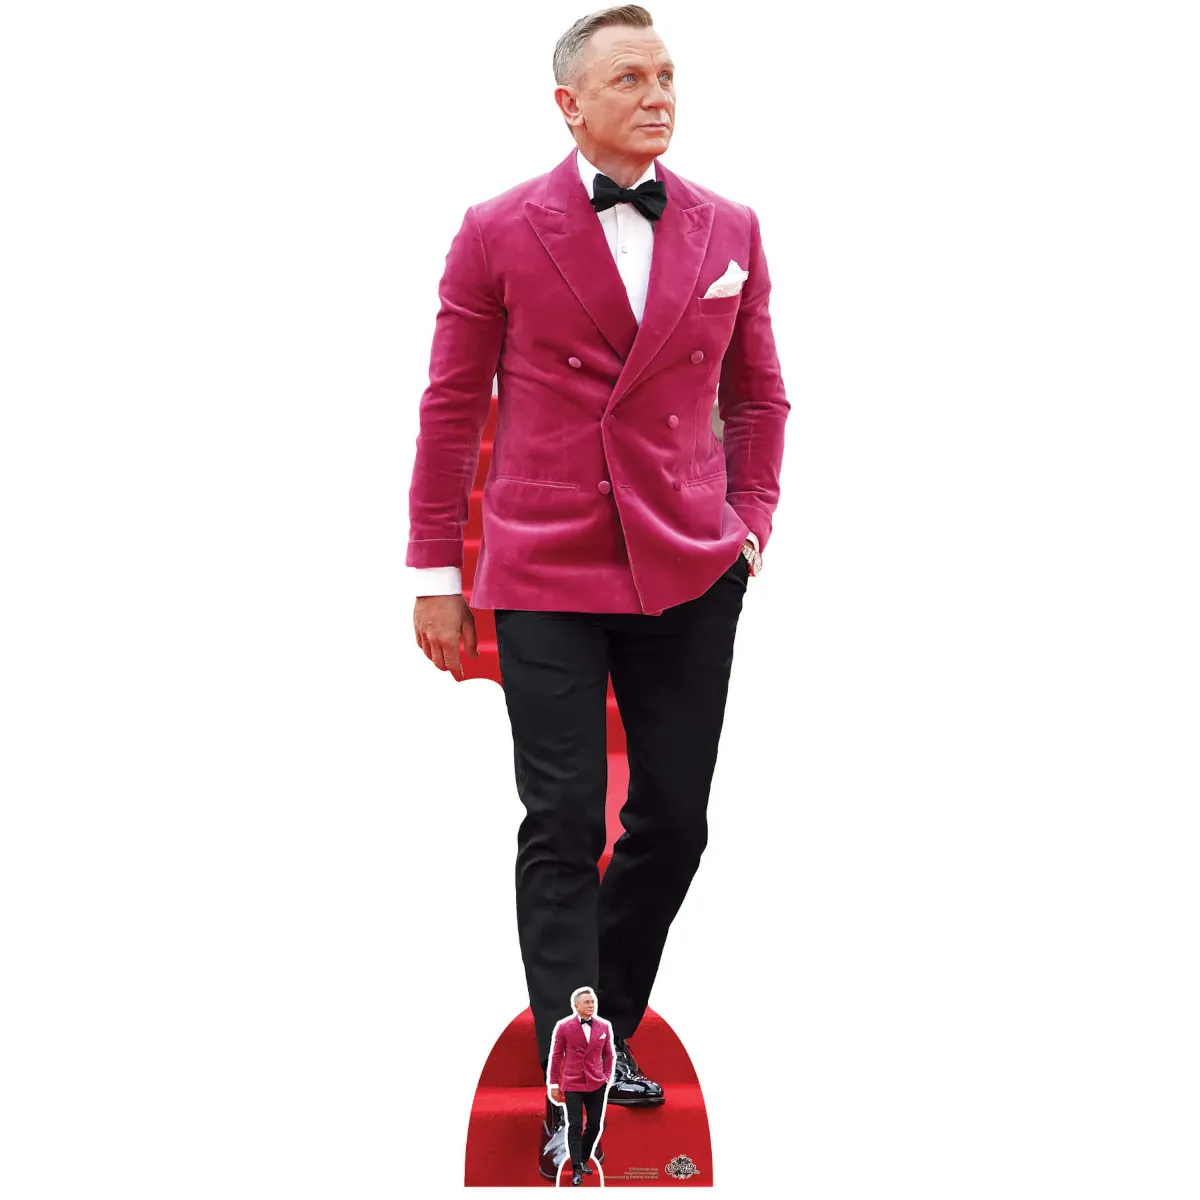 CS970 Daniel Craig 'Red Velvet Jacket' (English Actor) Lifesize + Mini Cardboard Cutout Standee Front